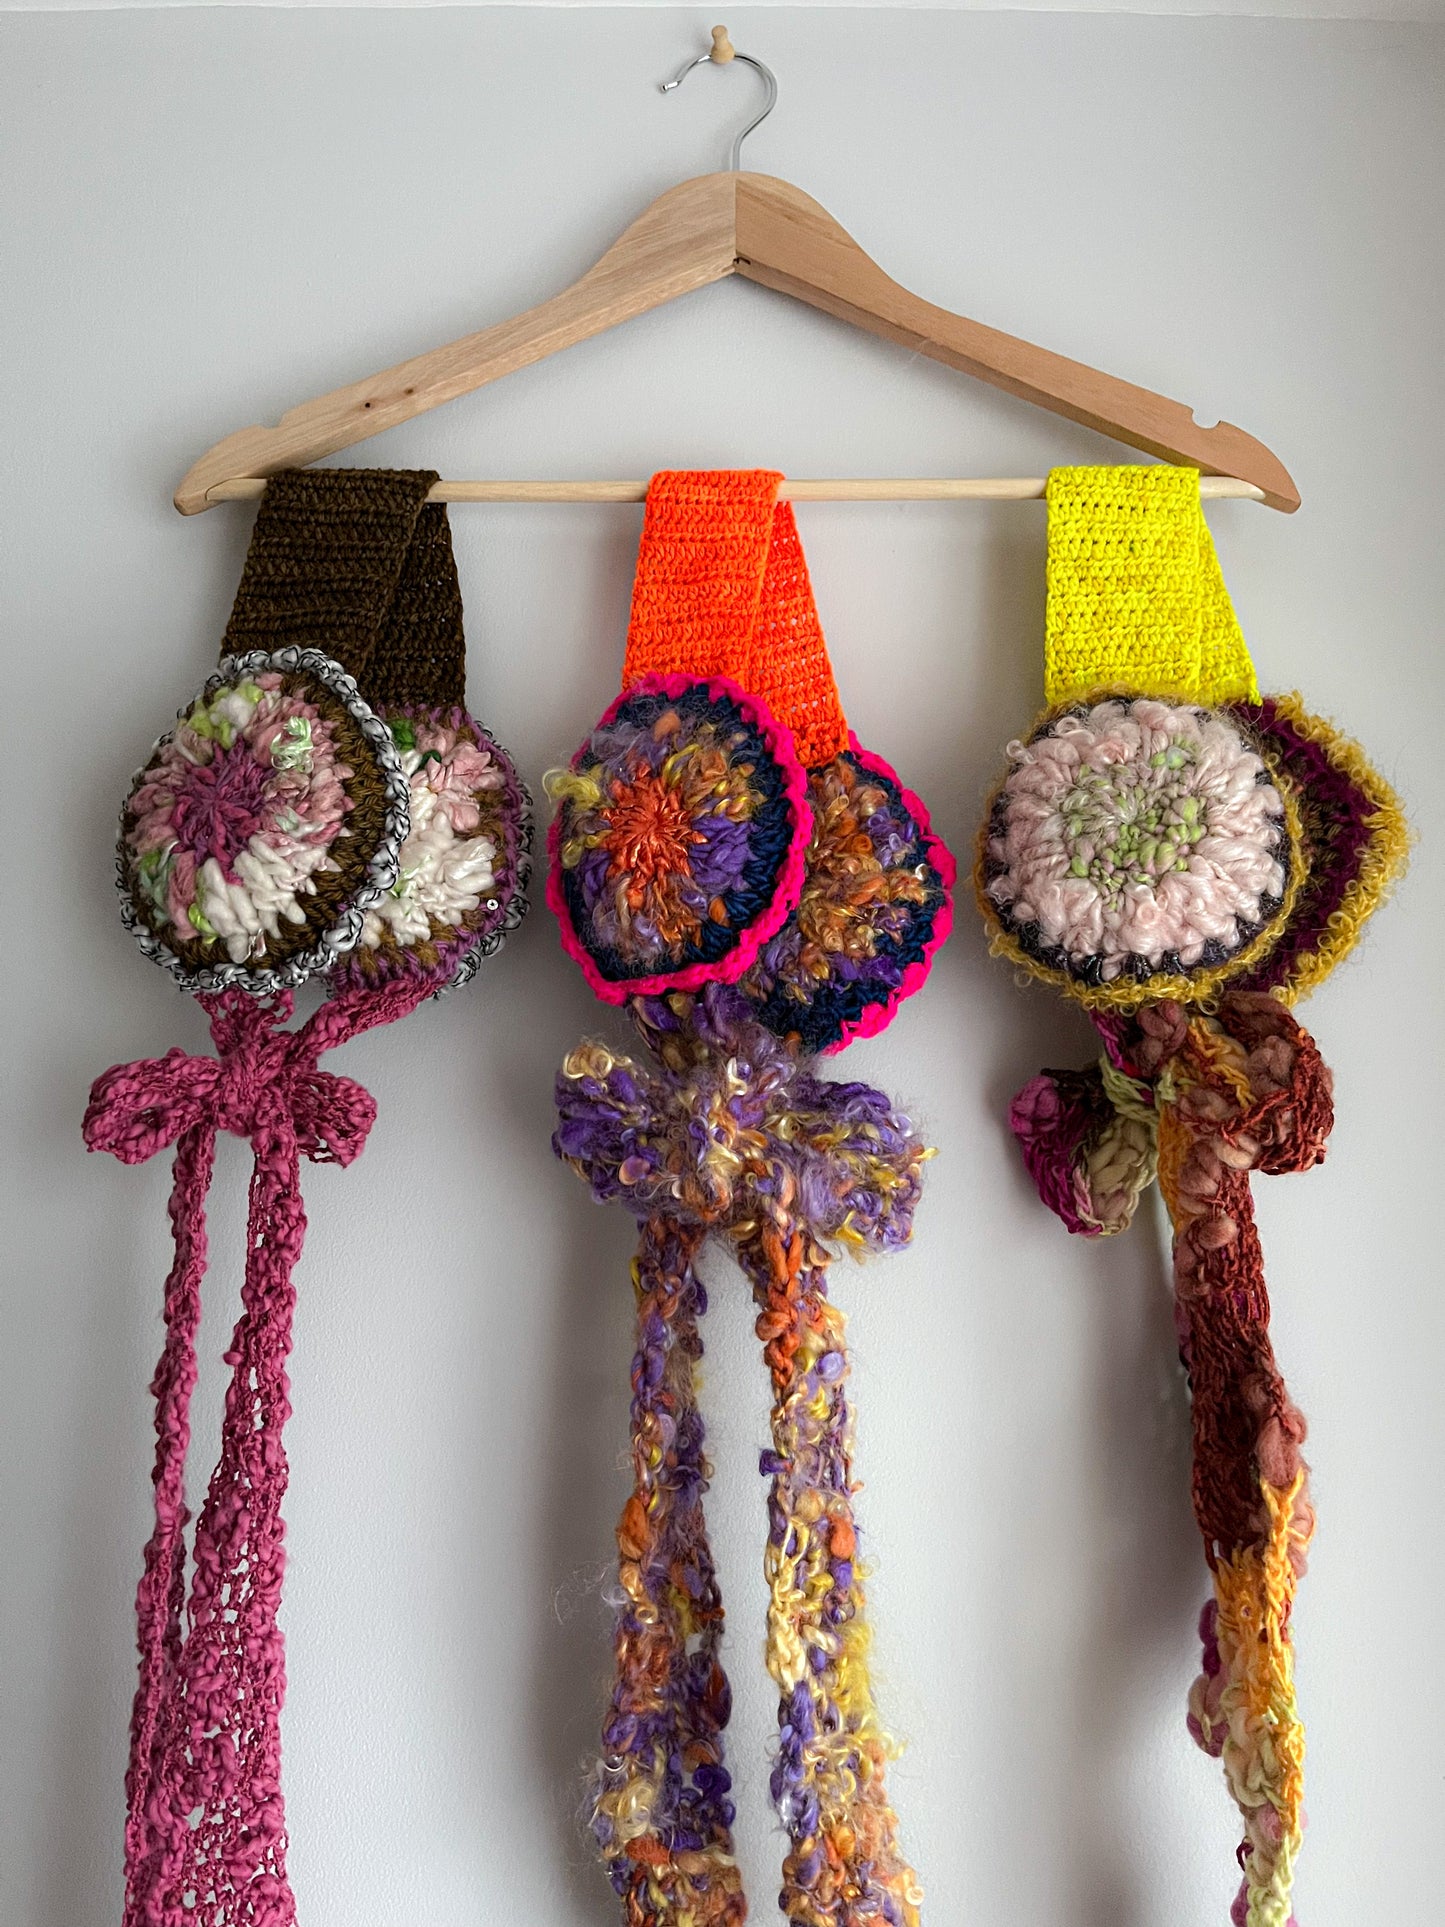 Crochet earmuff bonnet (brown headband)